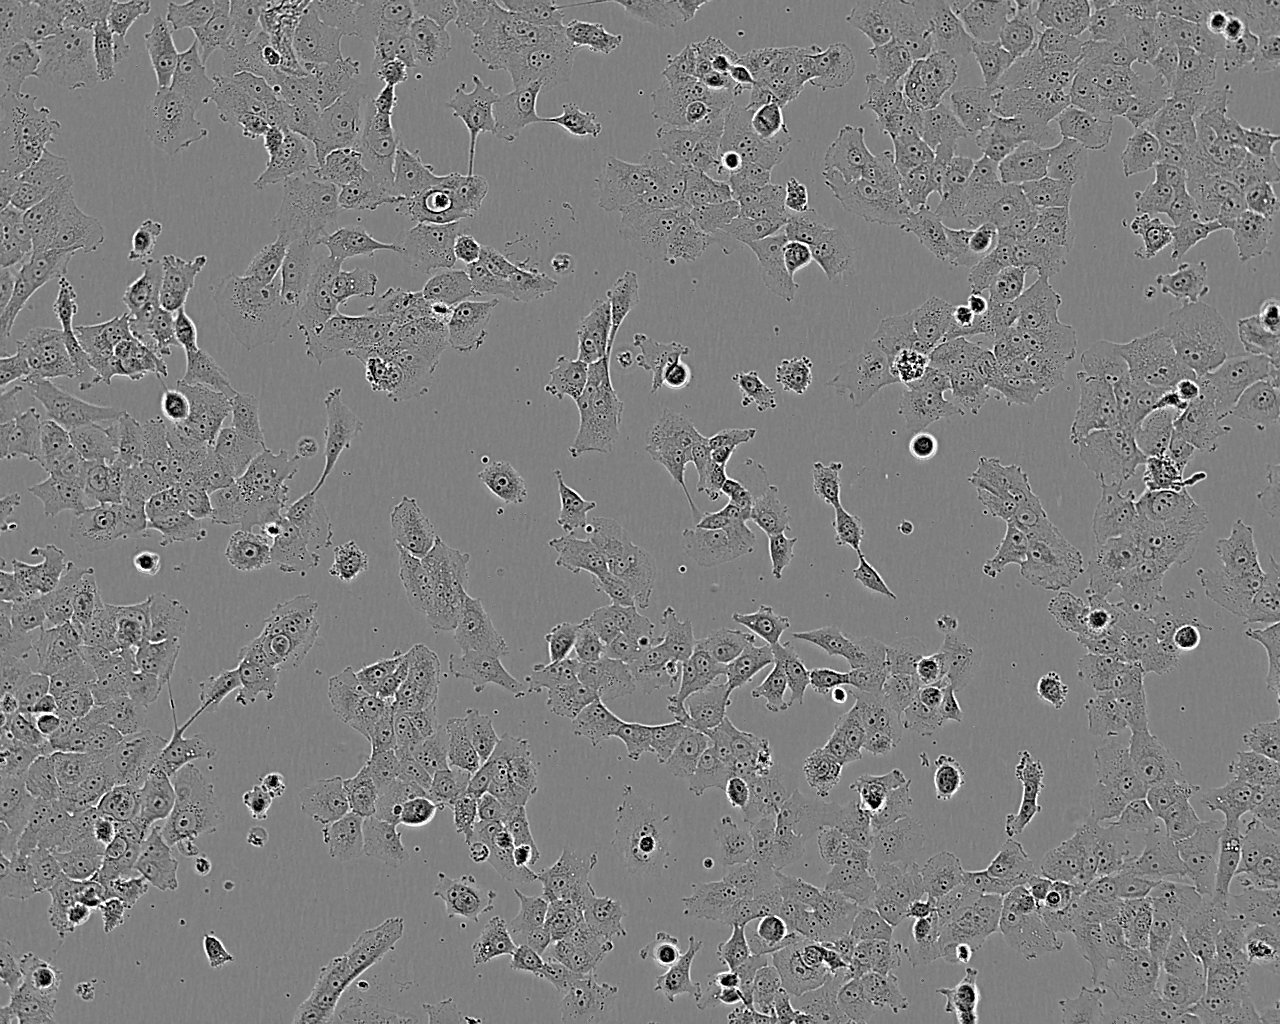 HBZY-1 Cell:大鼠肾小球系膜细胞系,HBZY-1 Cell